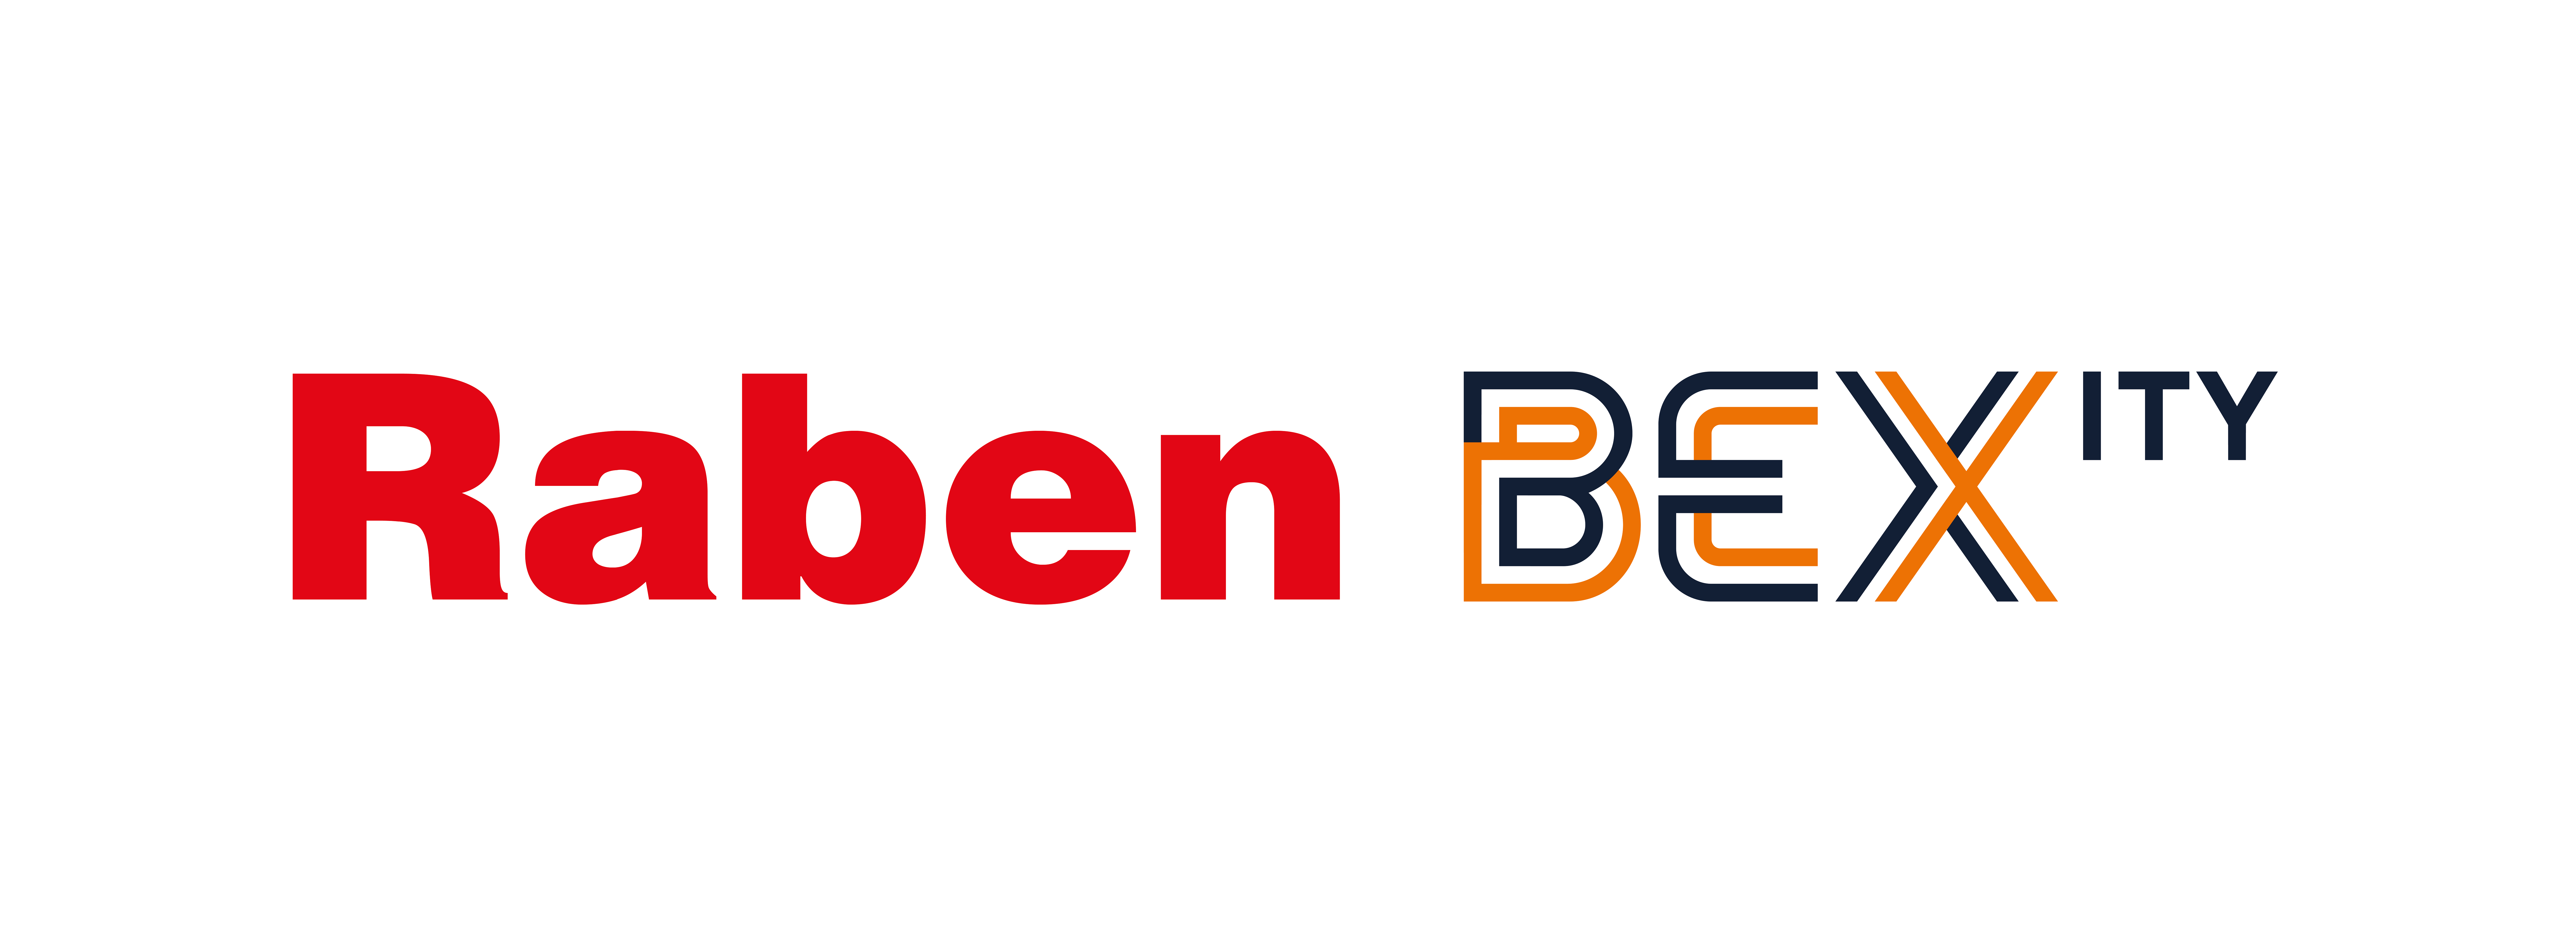 Raben BEXity Logo